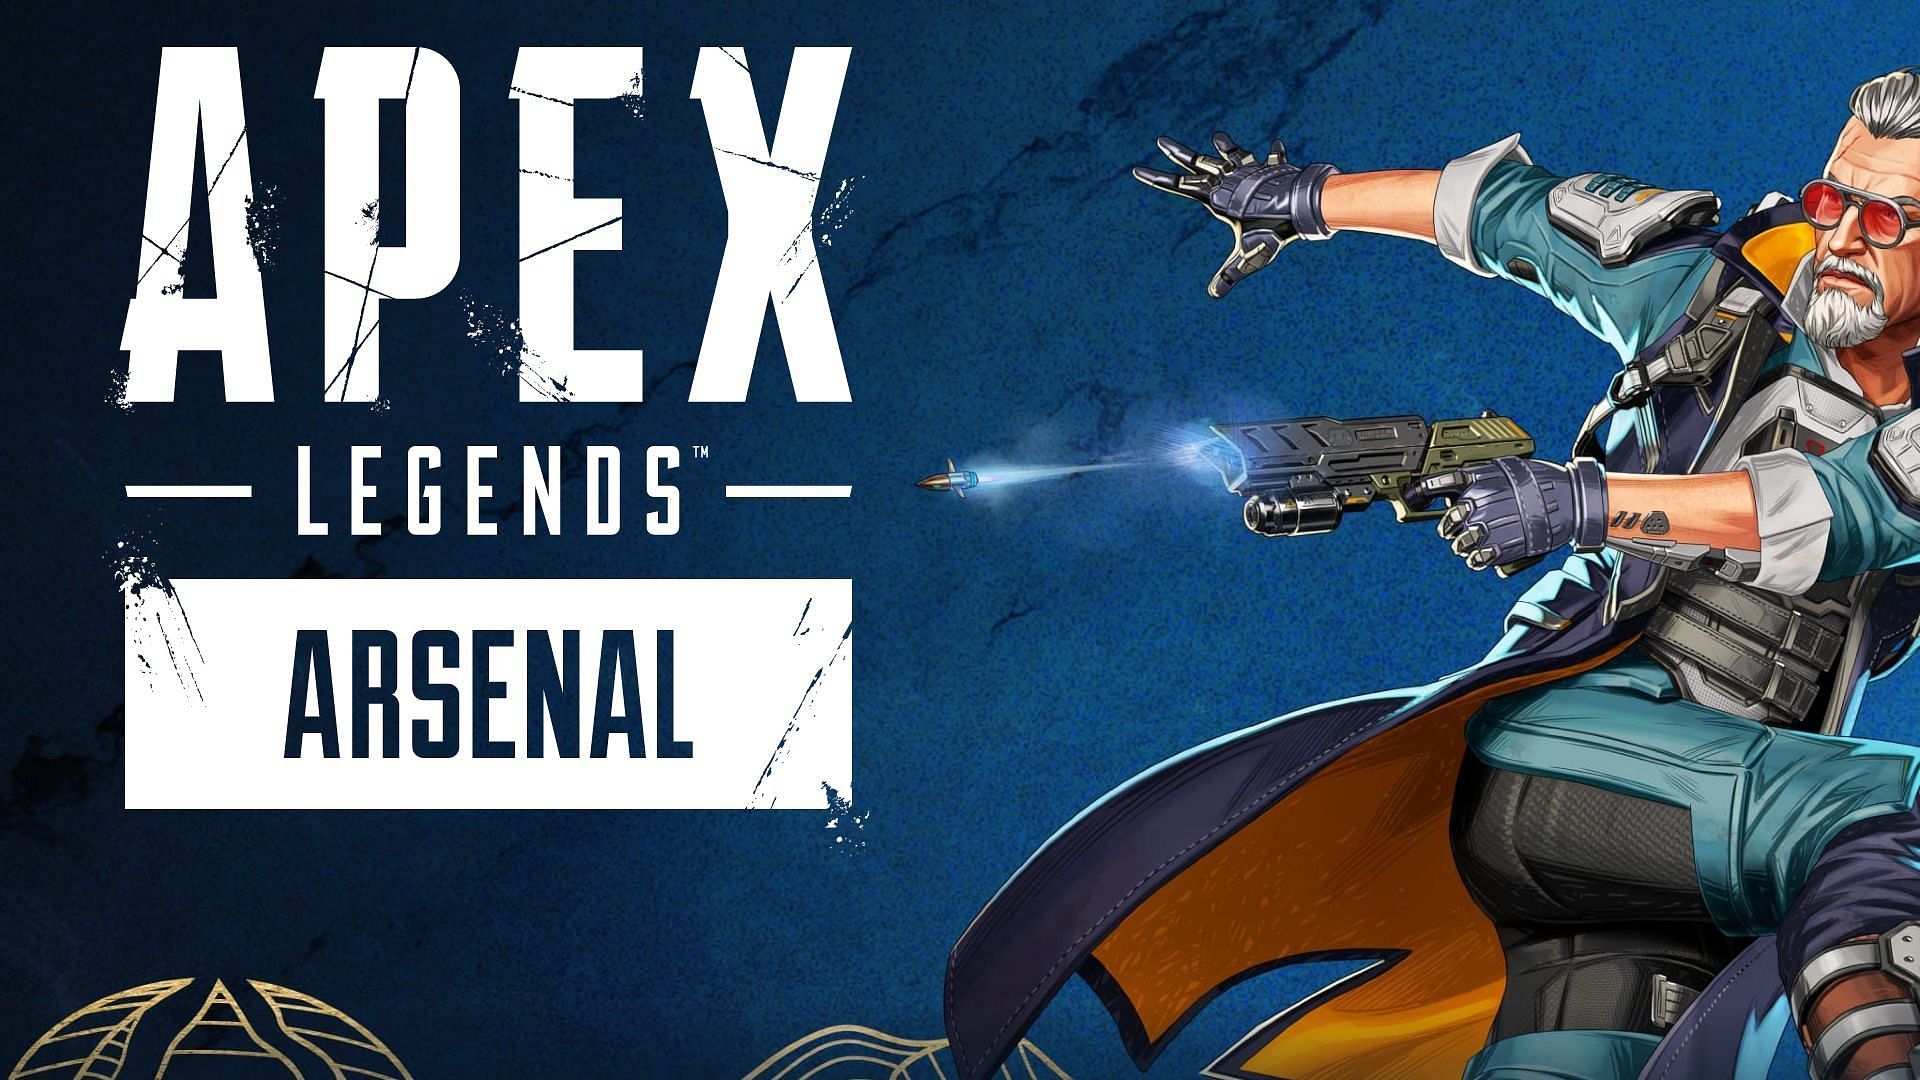 Apex Legends Season 17 launch date confirmed, adds new Legend